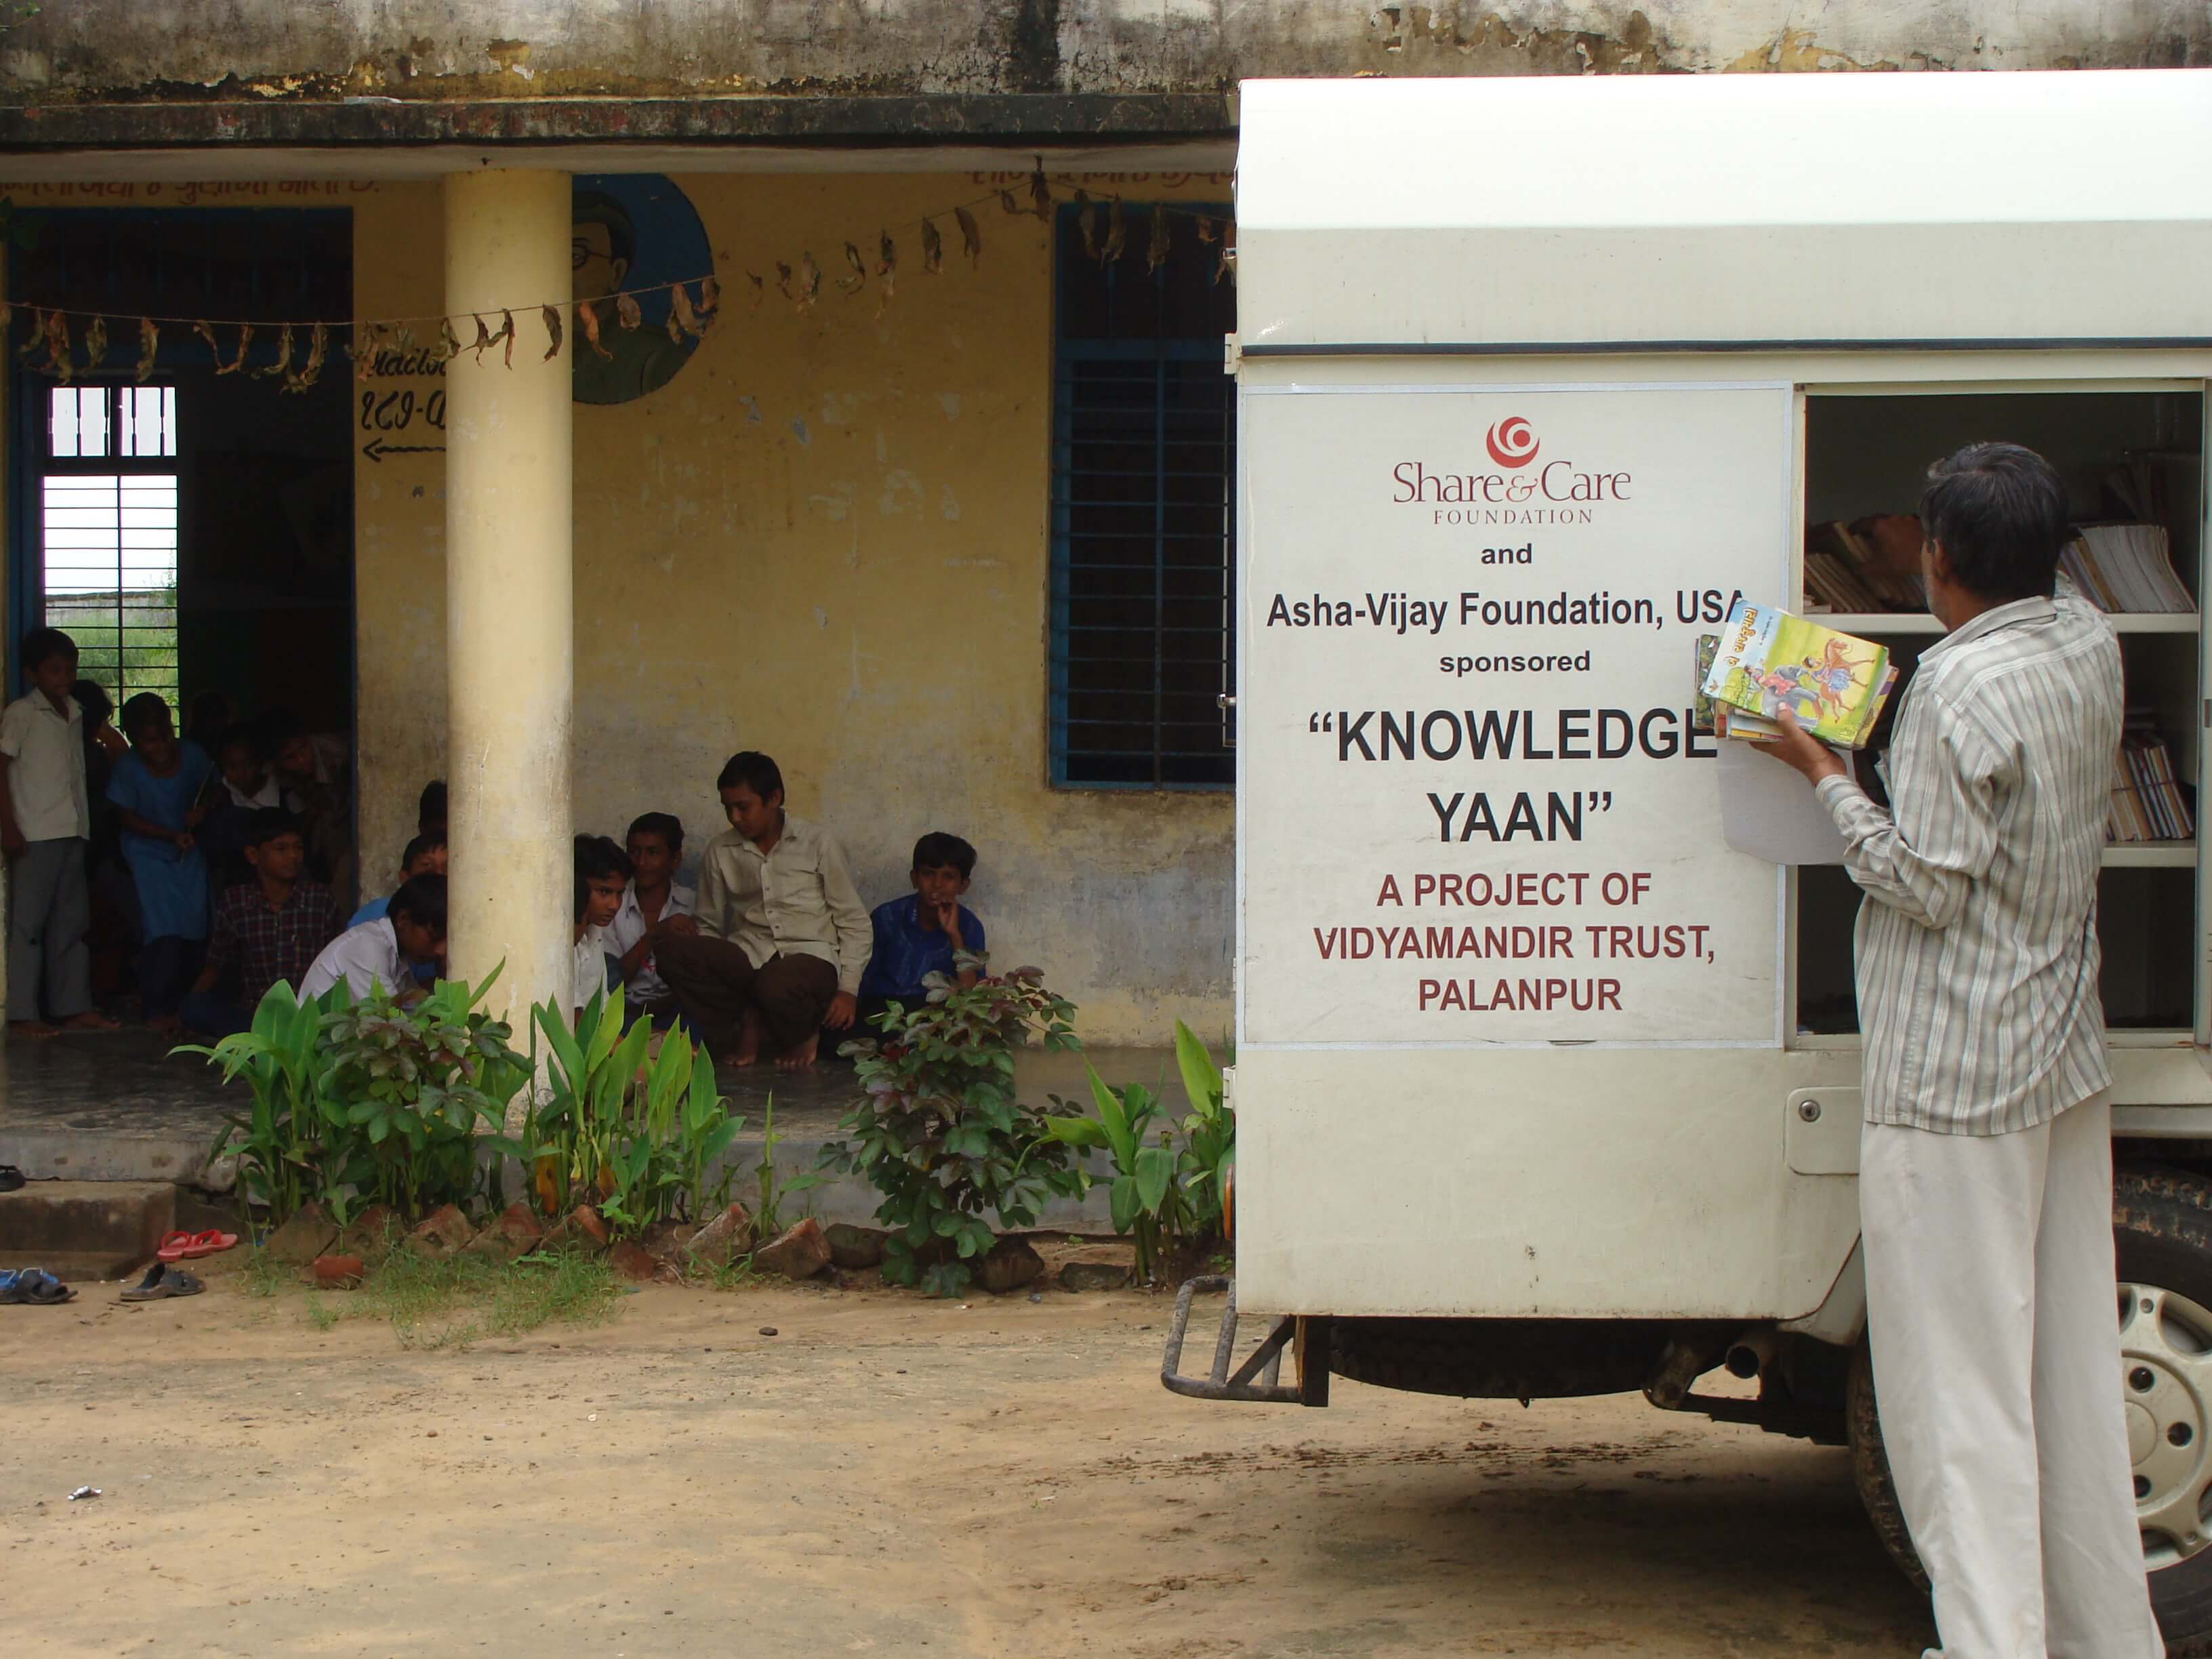 Share & Care and Asha-Vijay Foundation Knowledge Yaan Project-Vidyamandir Trust, Palanpur